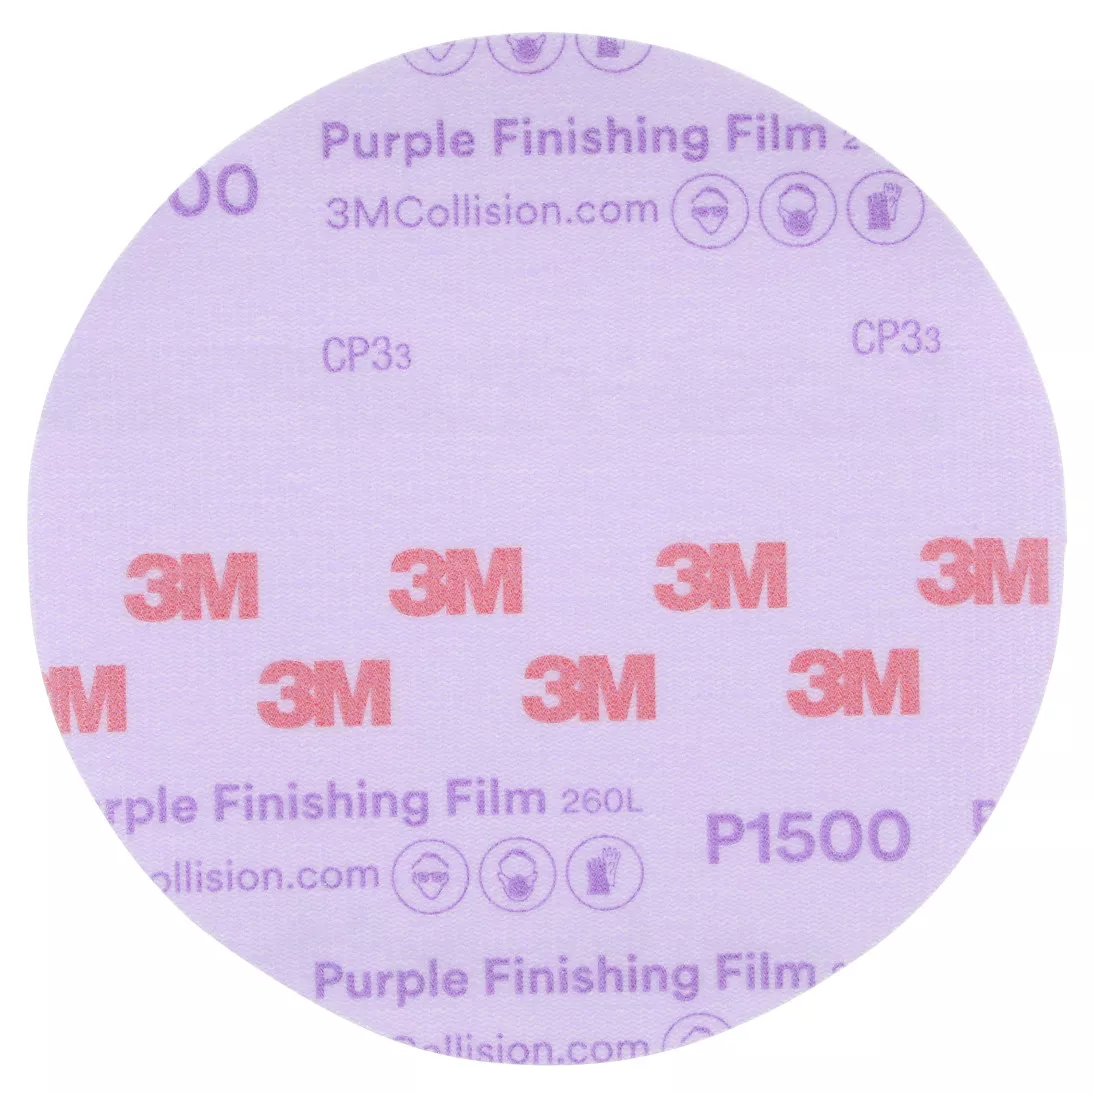 3M™ Hookit™ Purple Finishing Film Abrasive Disc 260L, 30667, 6 in,
P1500, 50 discs per carton, 4 cartons per case